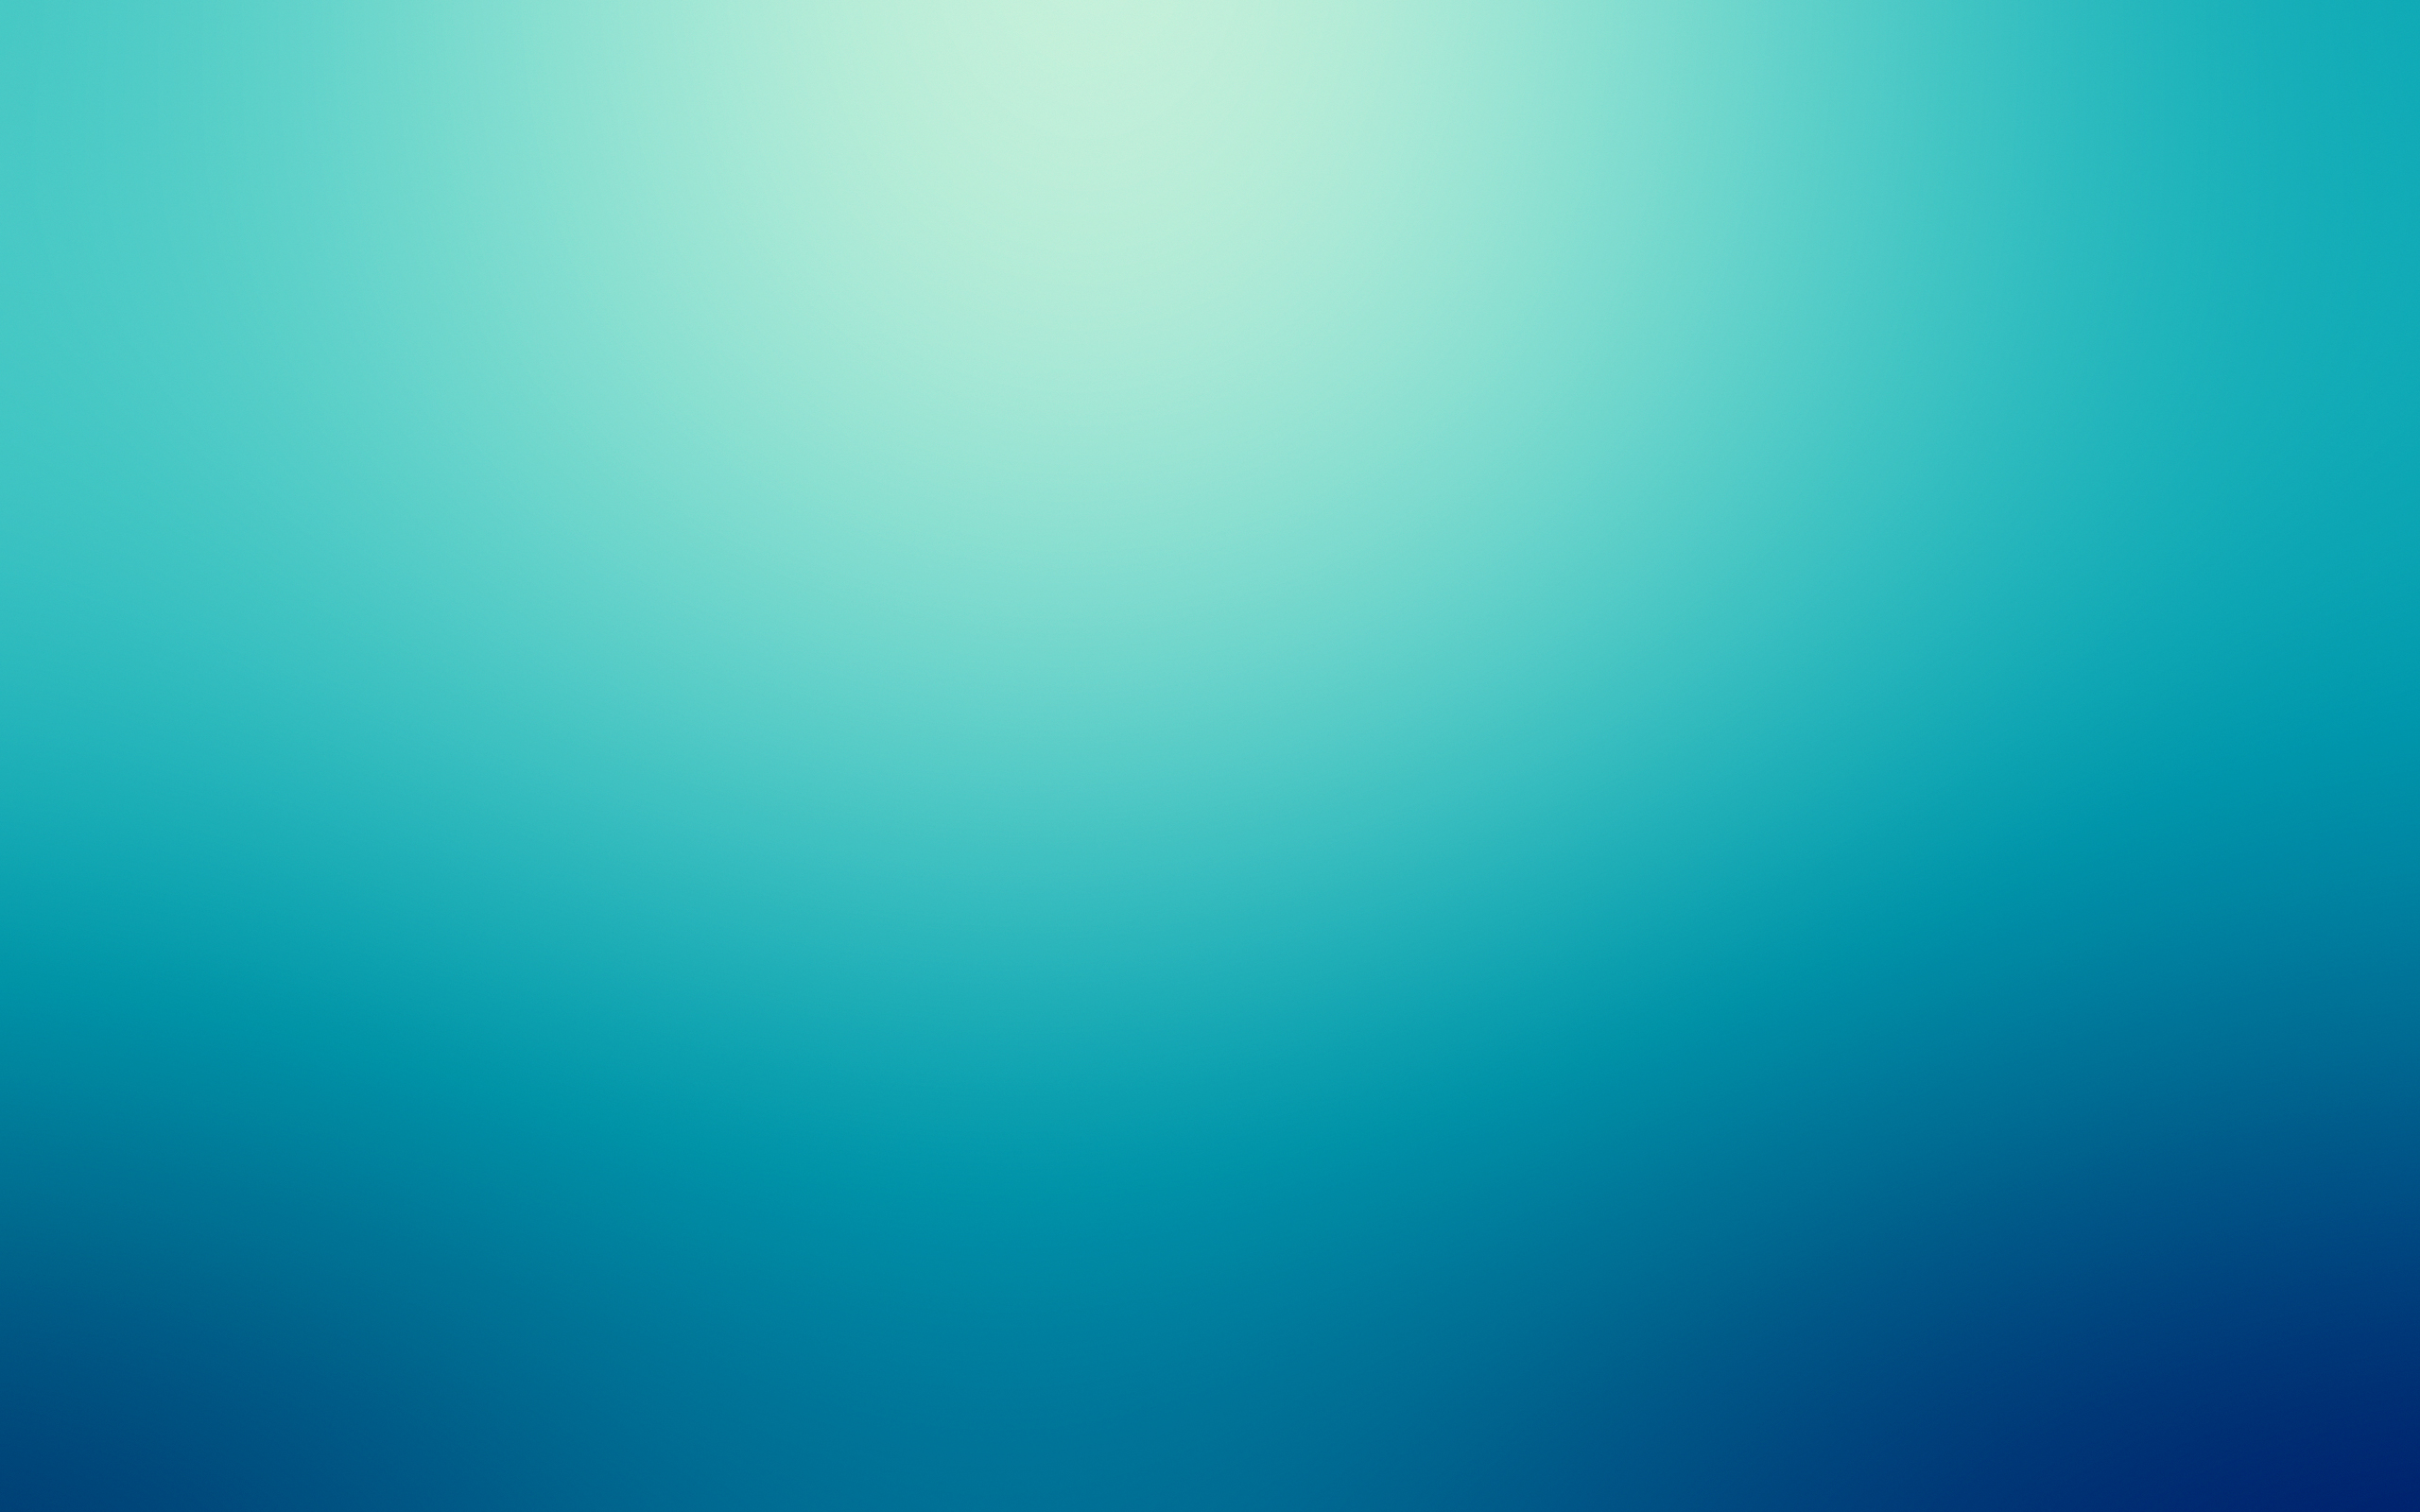 sfondo turchese hd,blu,acqua,verde,turchese,alzavola